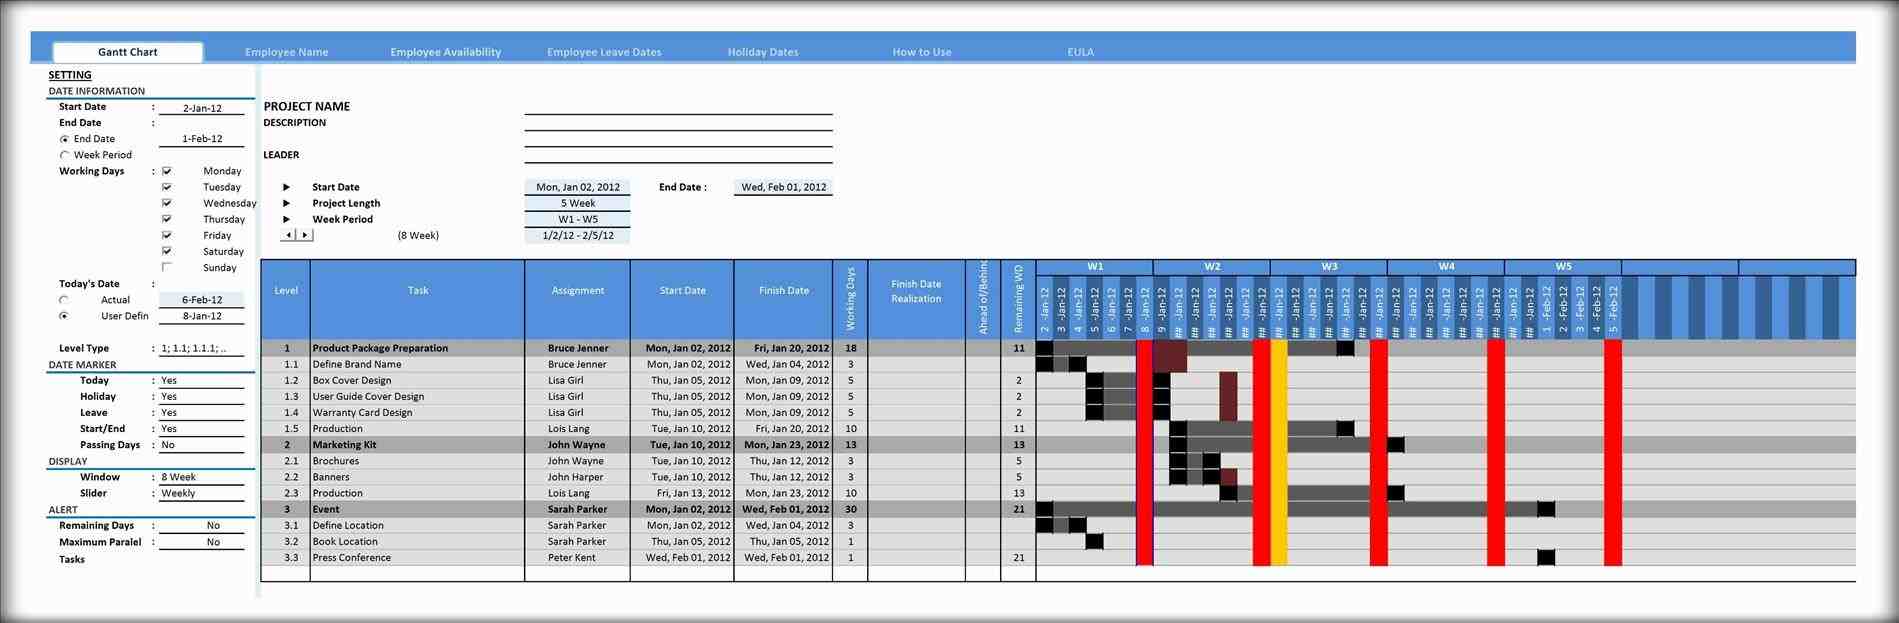 rhalramiinfo excel Free Download Gantt Chart Template For Excel gantt chart template image collections templates rhalramiinfo free project management nfmoshucomrhnfmoshucom free